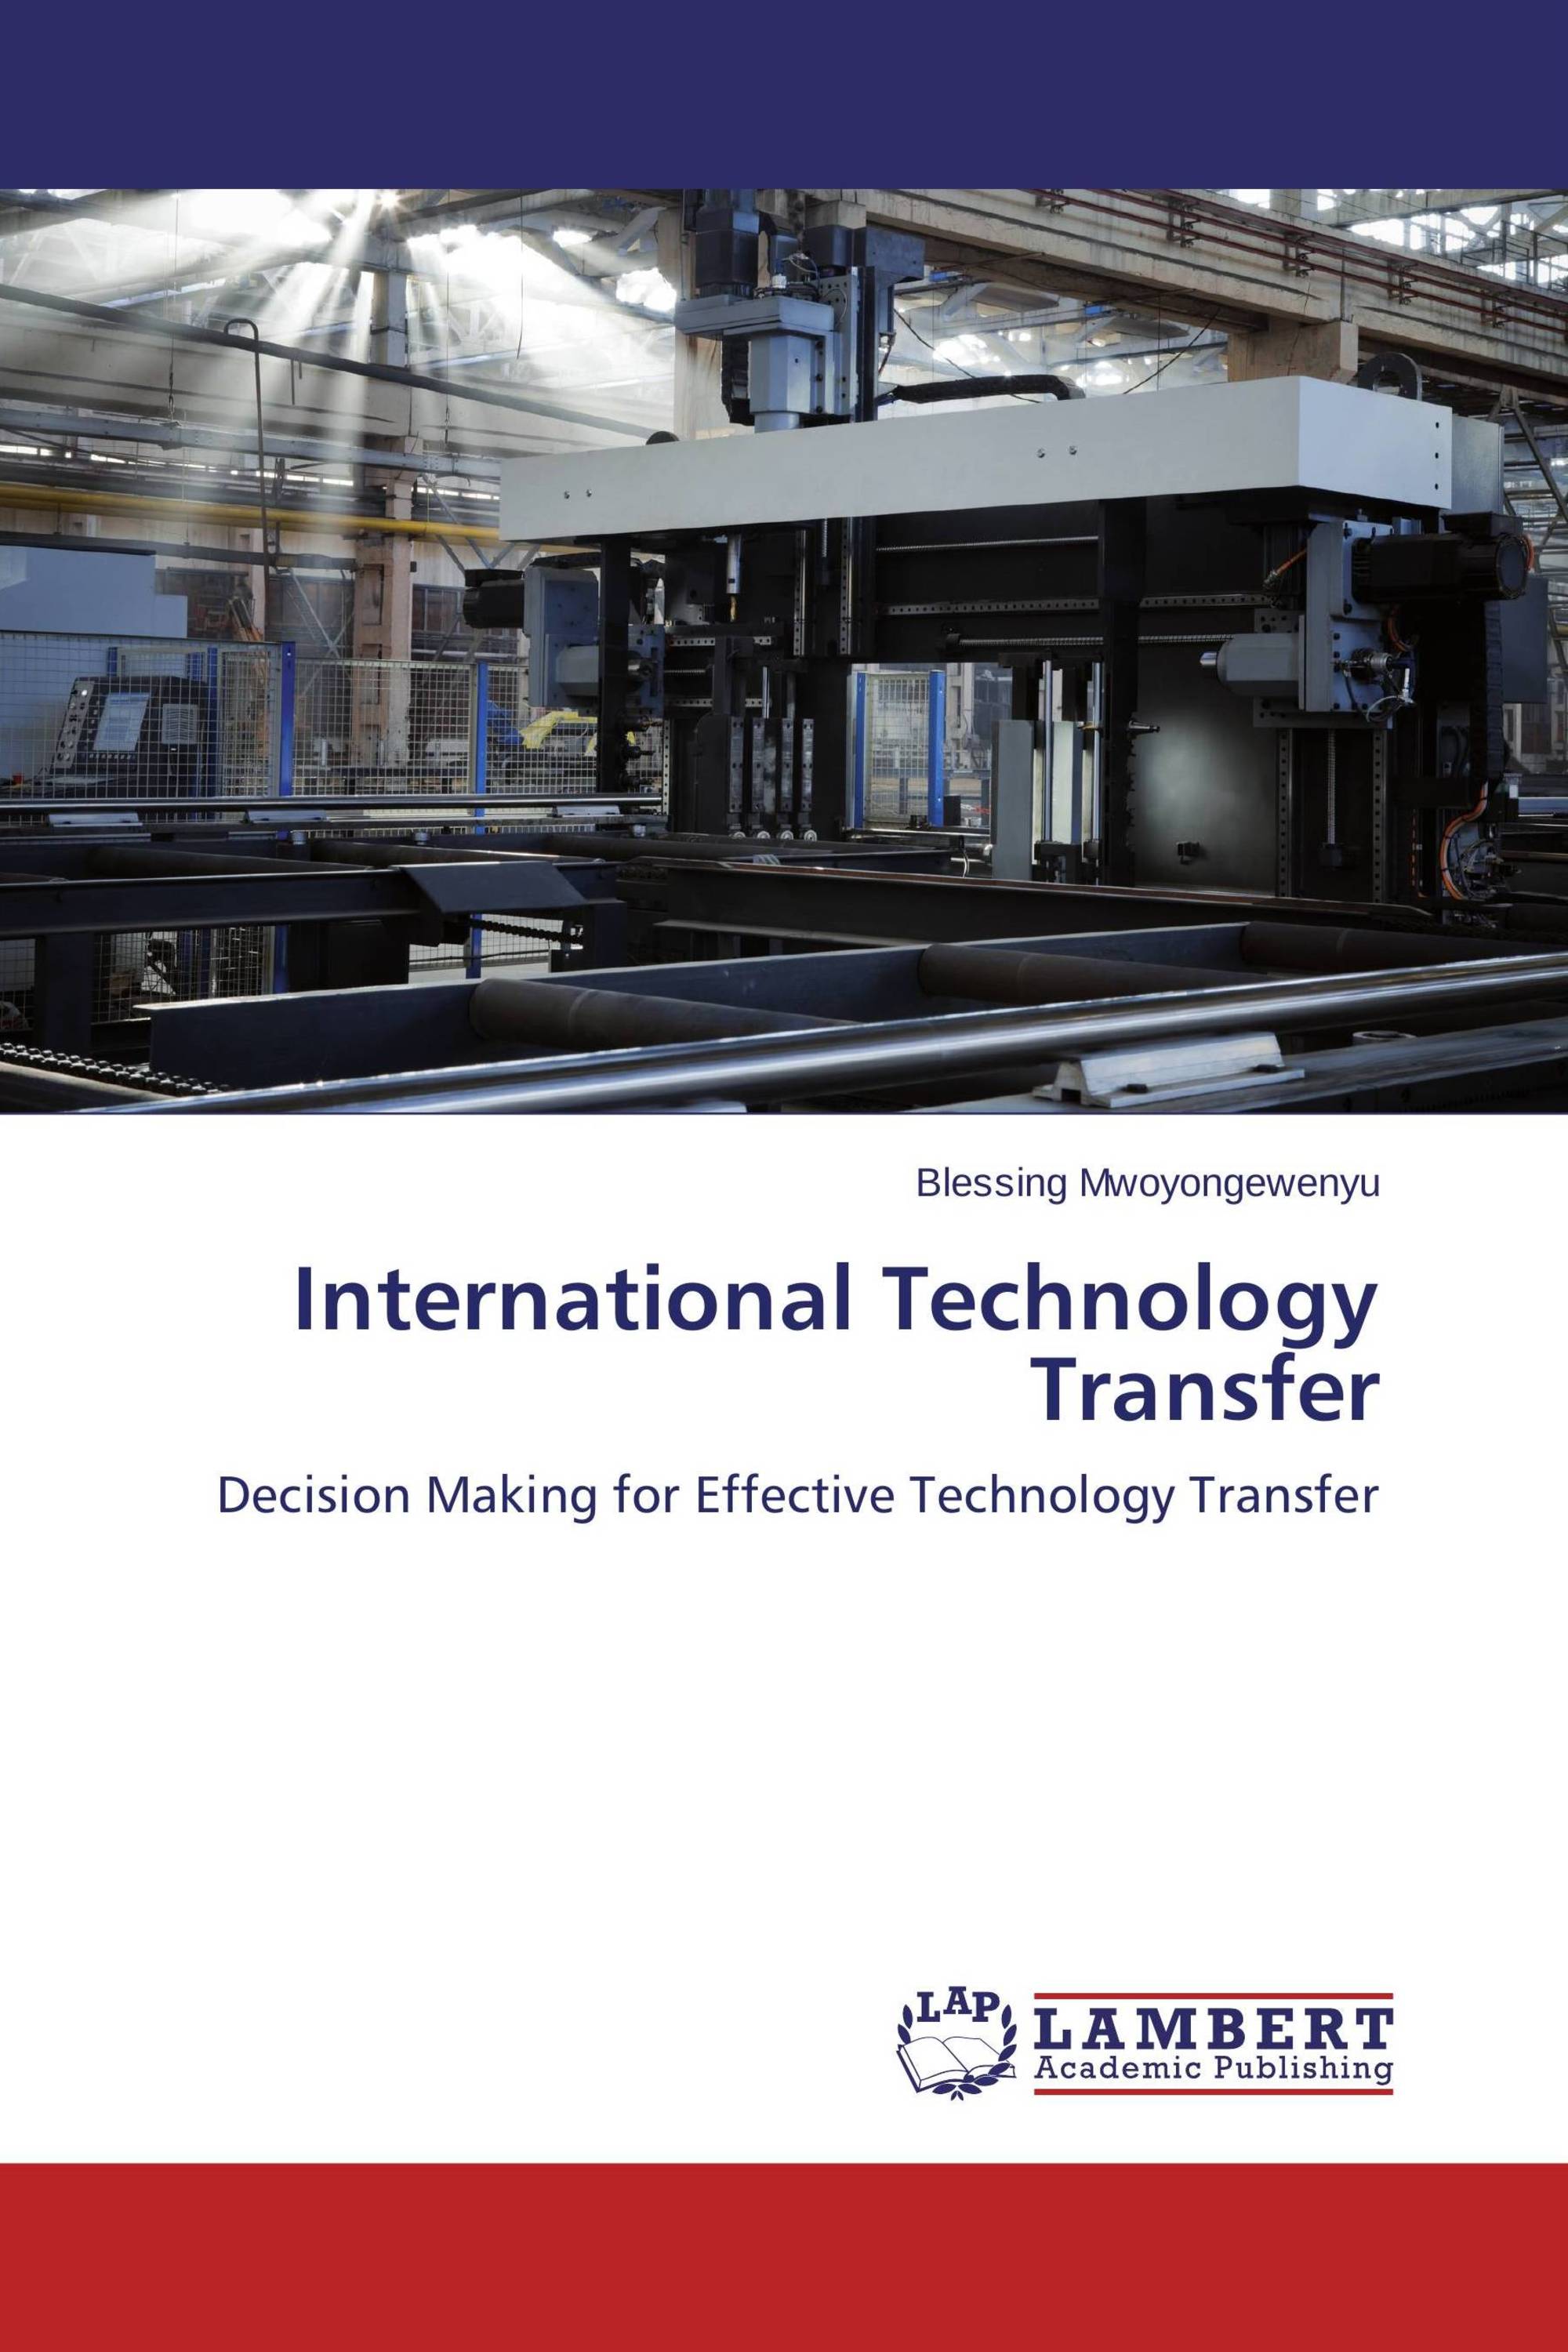 Technology Transfer Jobs Singapore